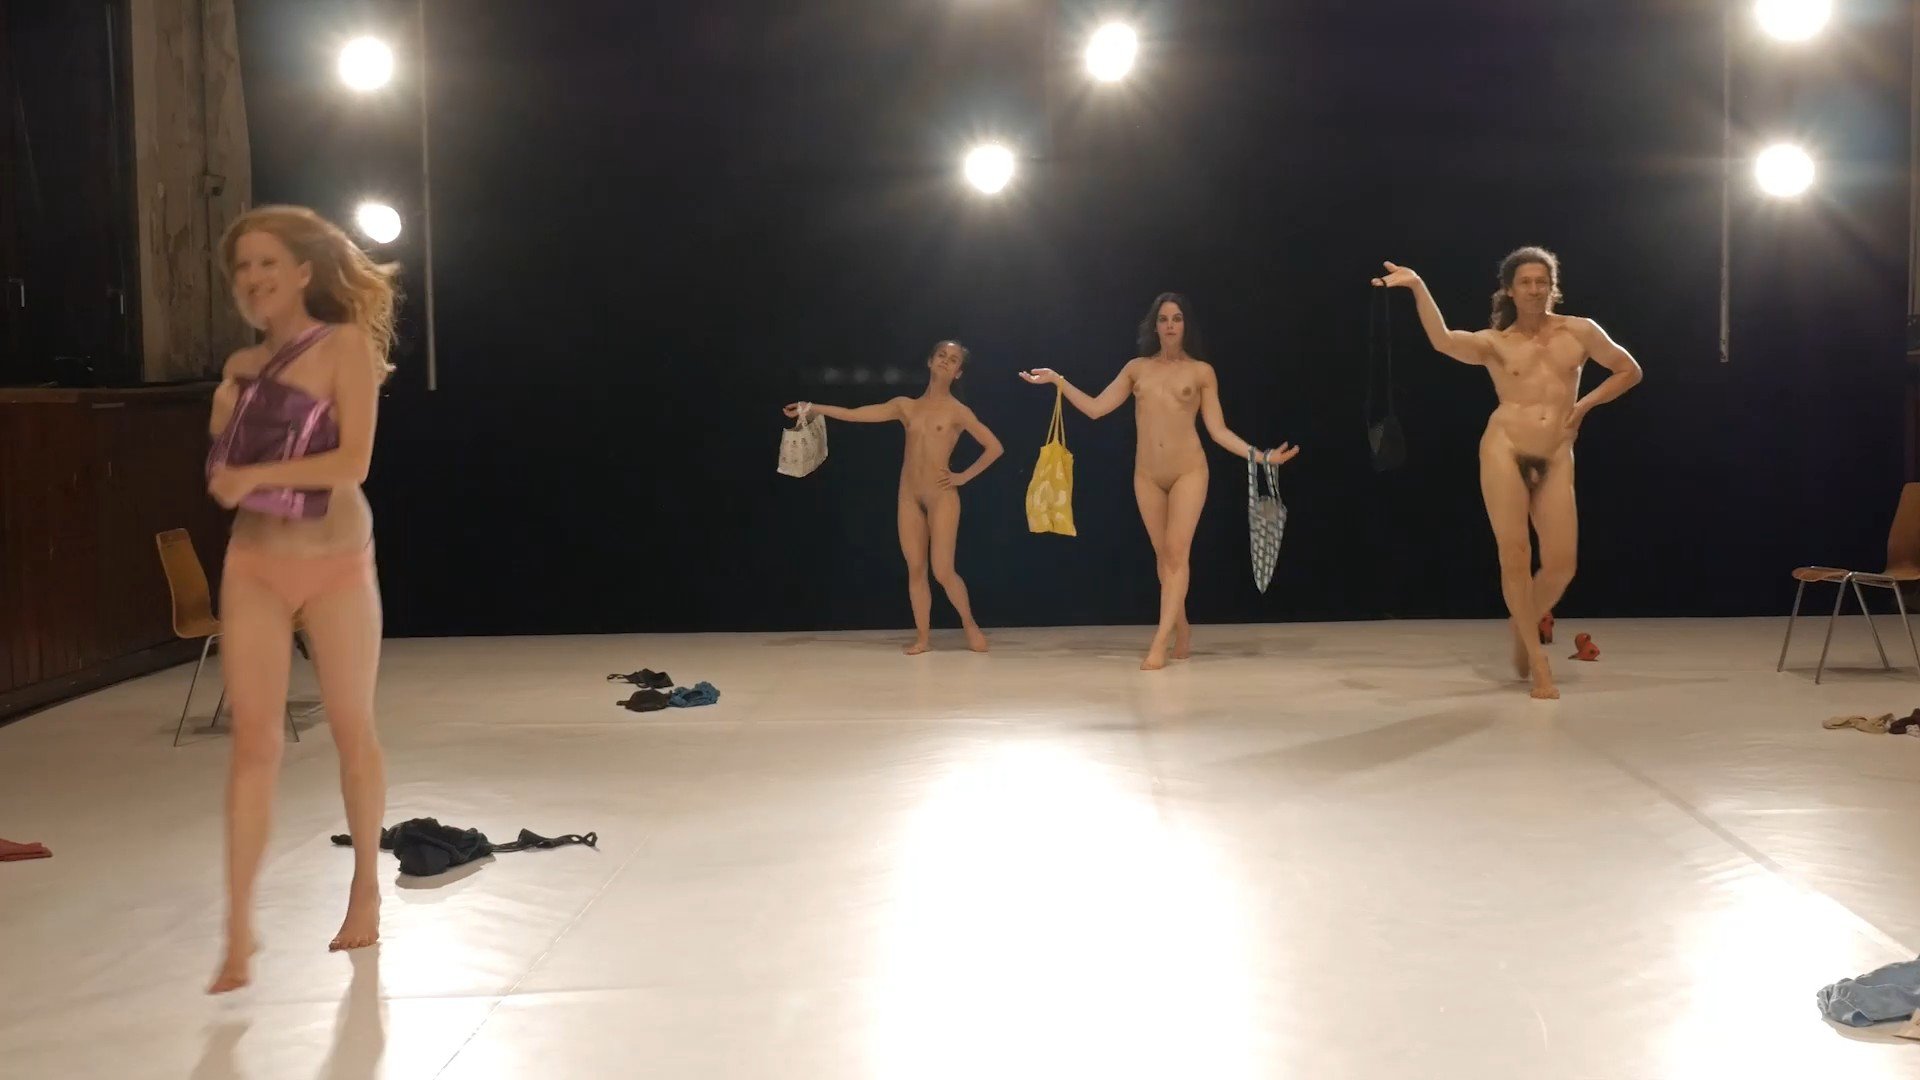 chad robichaux add nude performance on vimeo photo